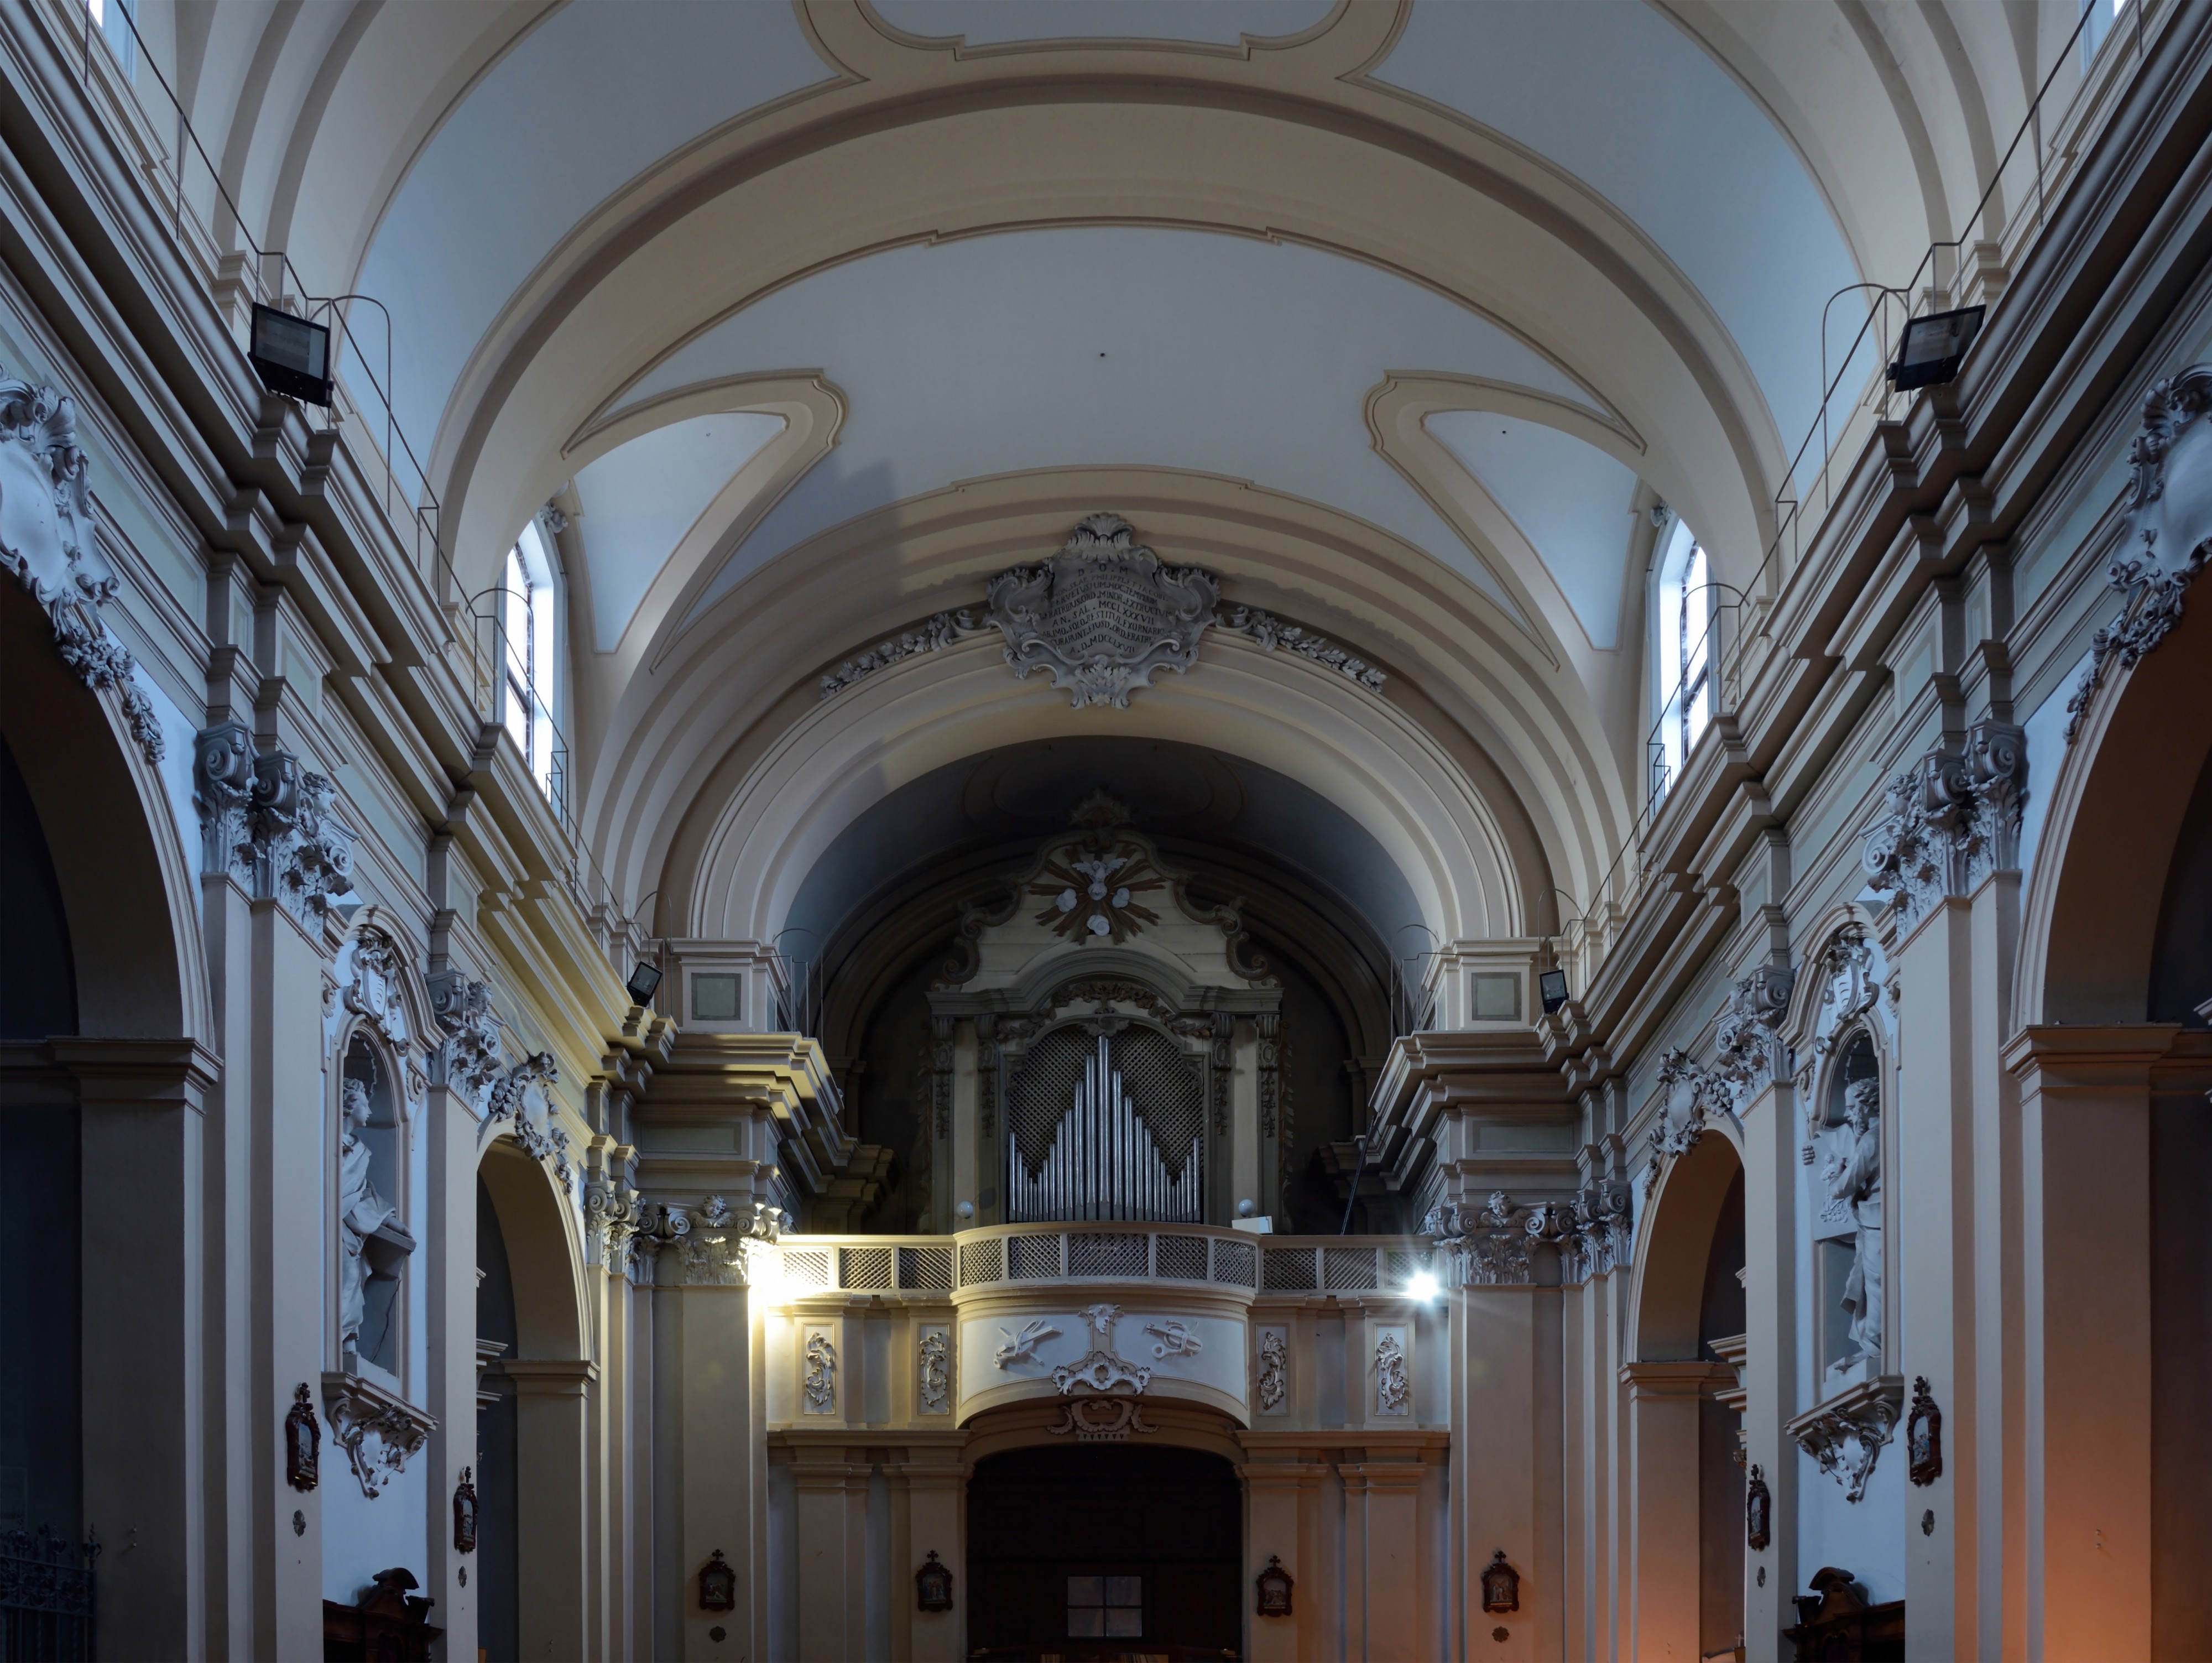 Pipe Organ of St. Francis in Amelia